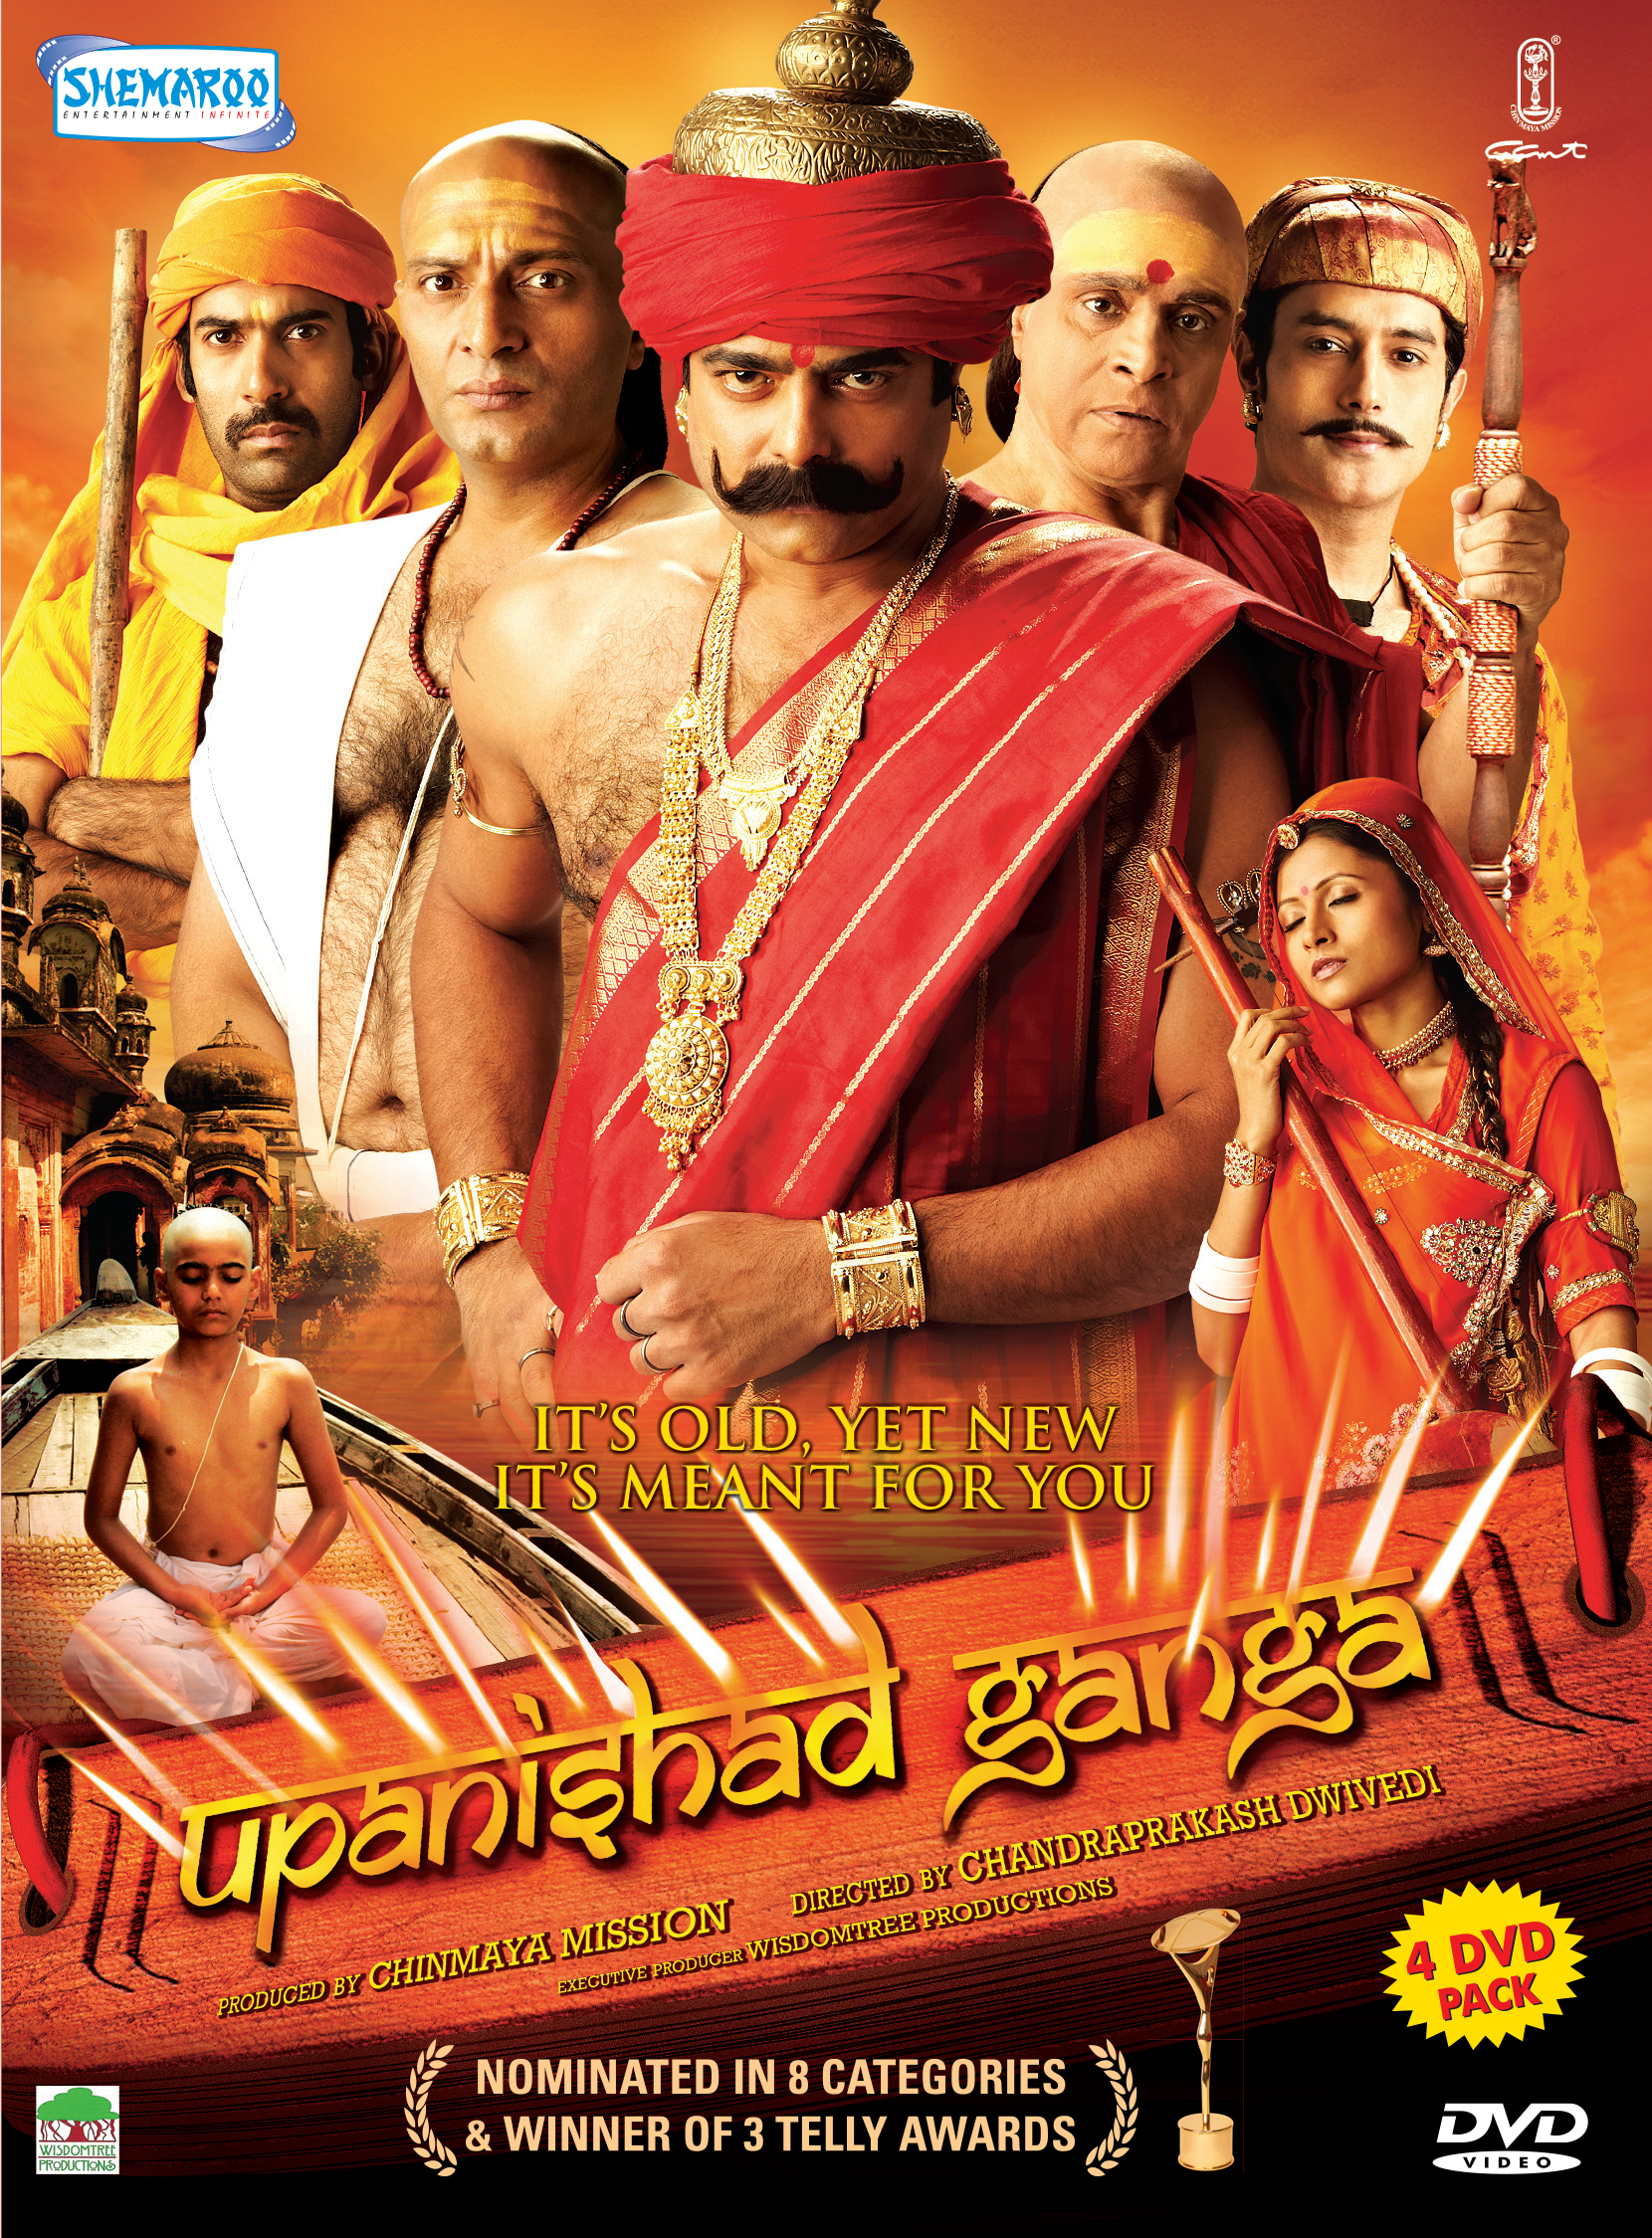 Upanishad Ganga Vol 1 of 4 (DVD - Hindi Show with English Subtitles)